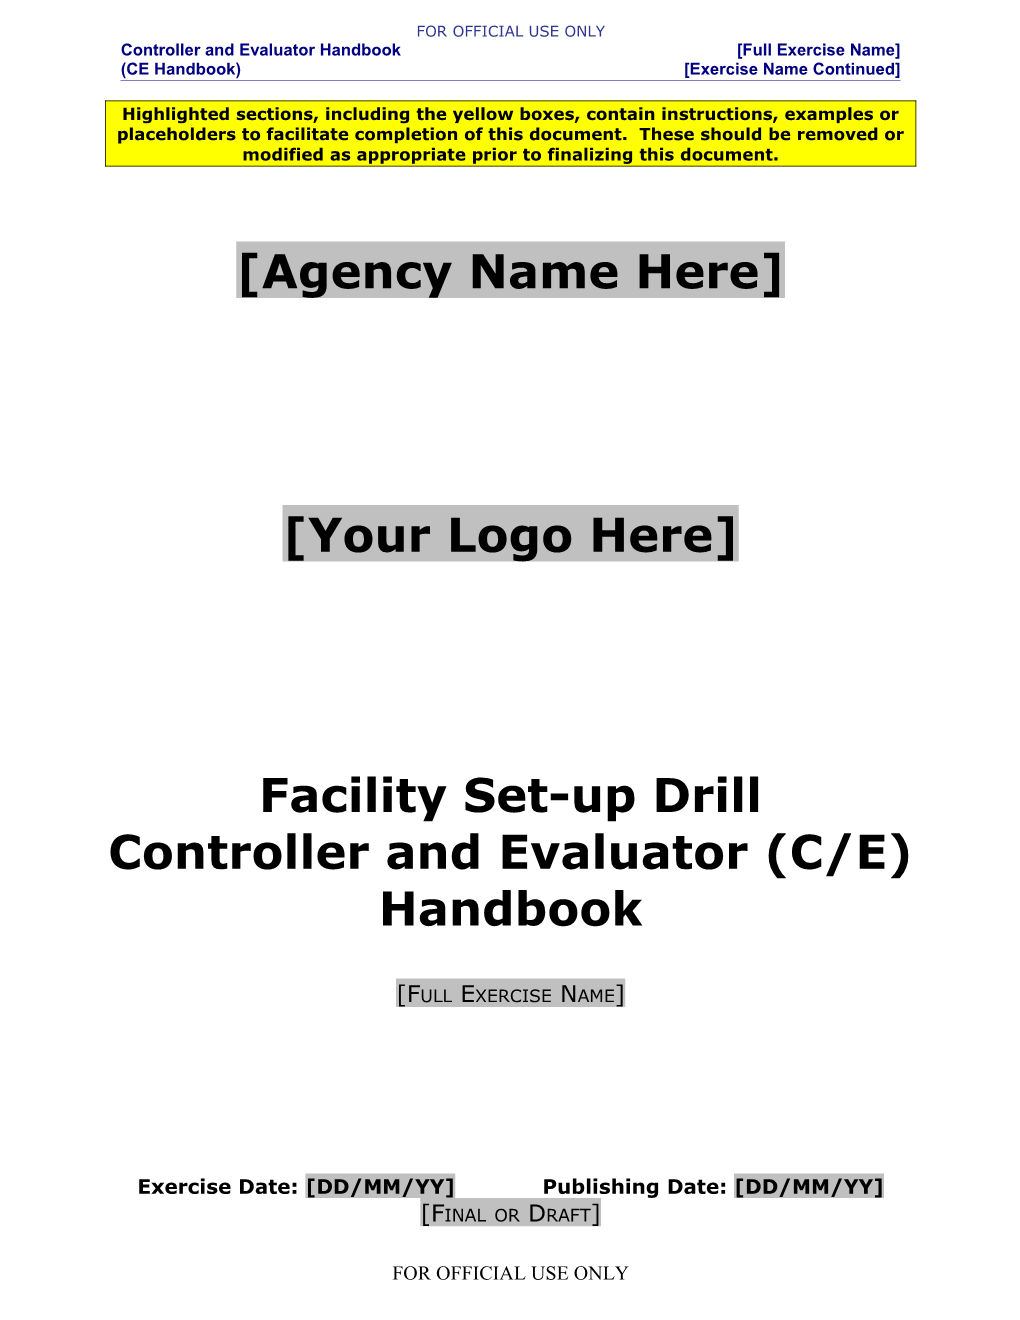 Controller and Evaluator Handbook Full Exercise Name